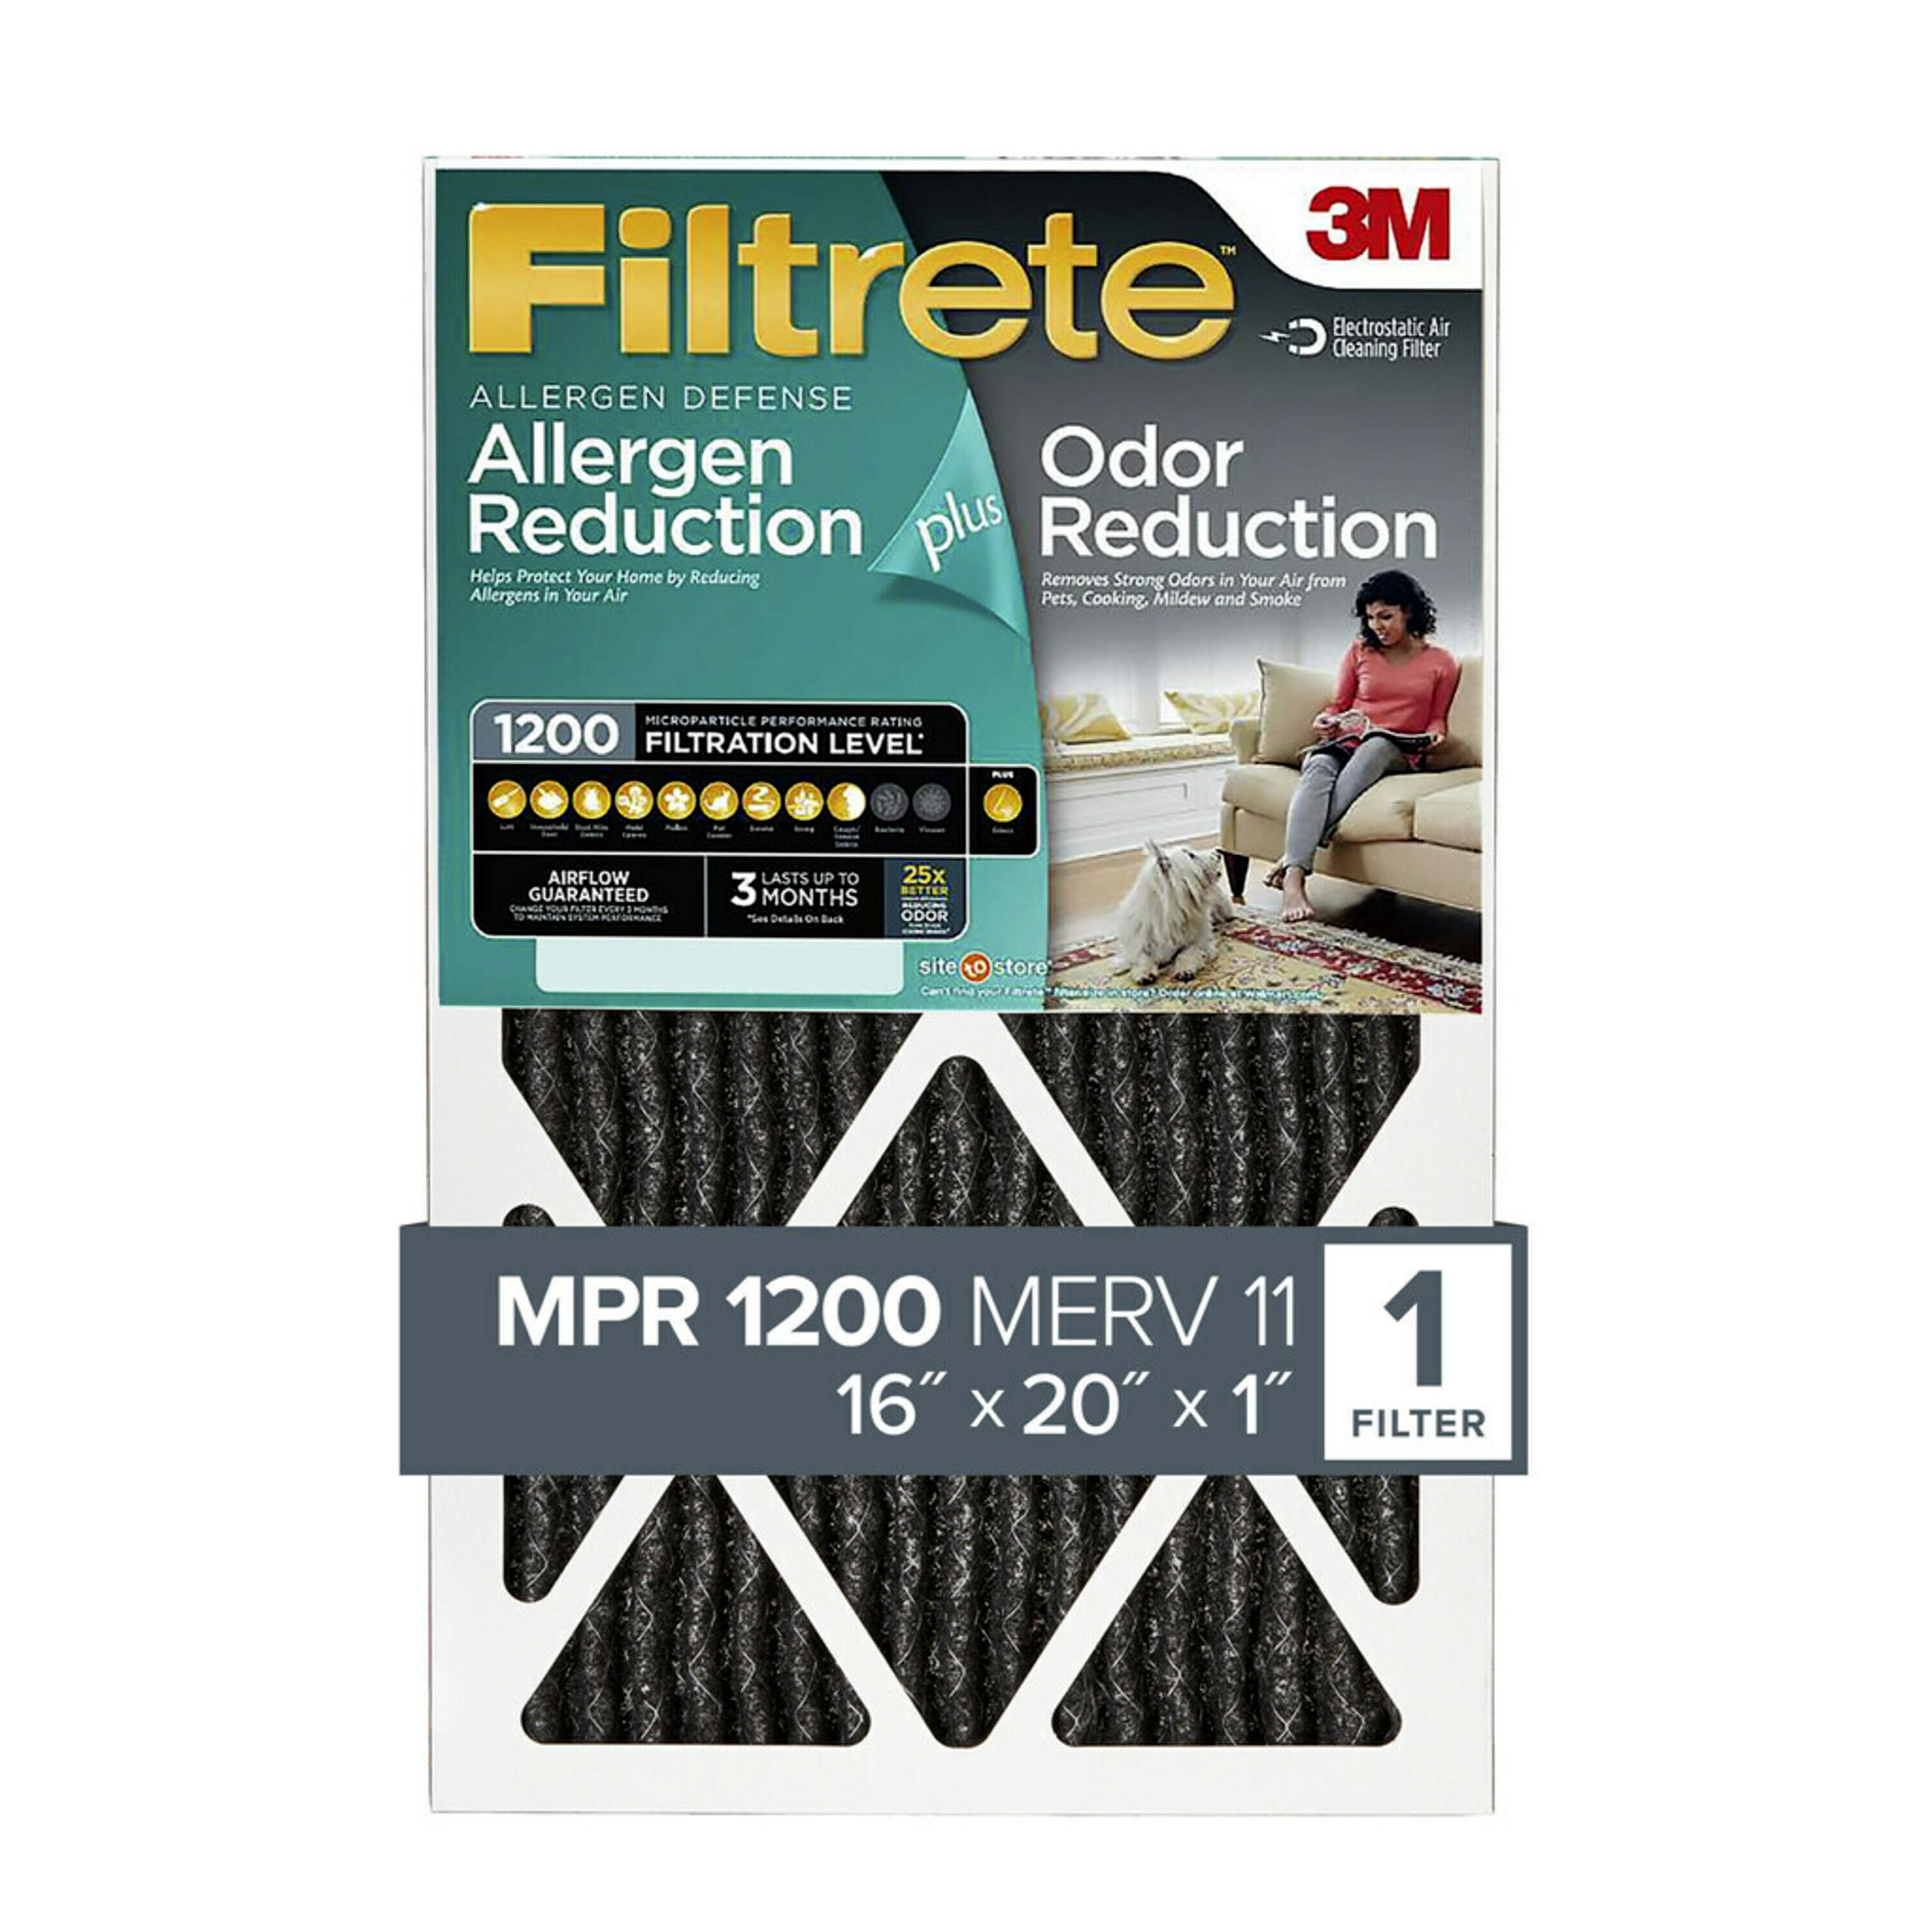 Filtrete by 3M, 16x20x1, Allergen Plus Odor Reduction HVAC Furnace Air Filter, Captures Pet Dander, Pollen and Traps Odors, 1200 MPR, 1 Filter